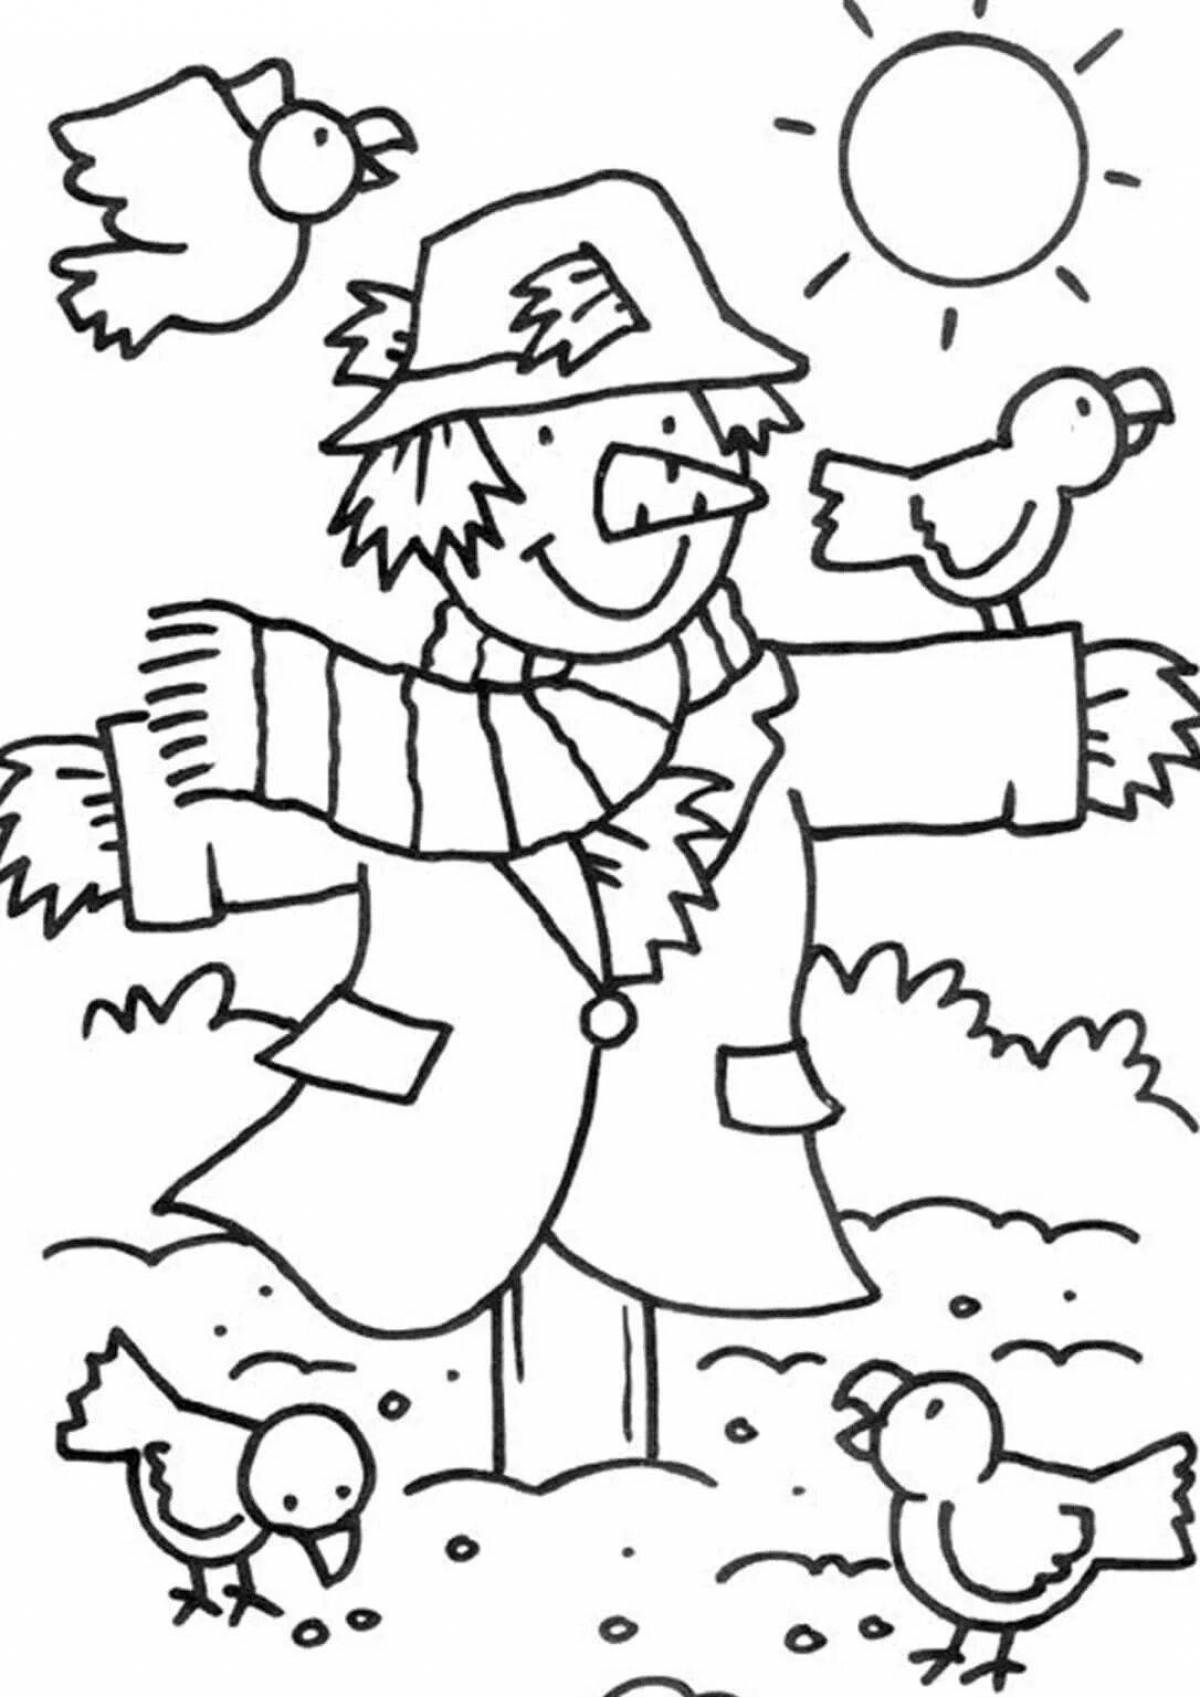 Humorous scarecrow coloring book